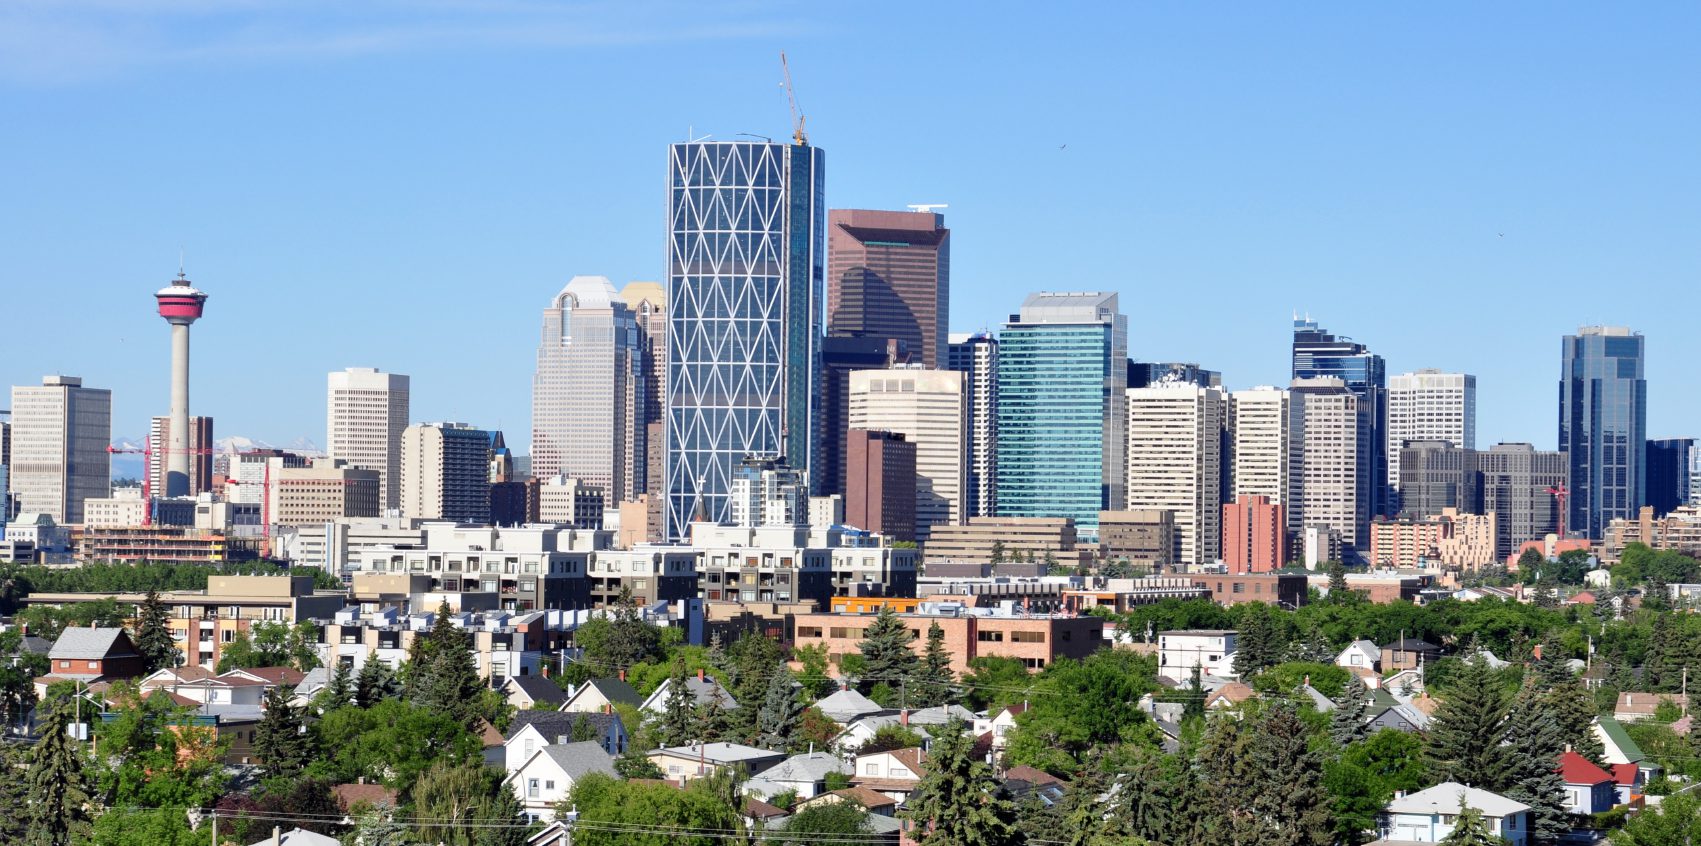 Calgary Headlines List of U-Haul Canadian Destination Cities for 2015